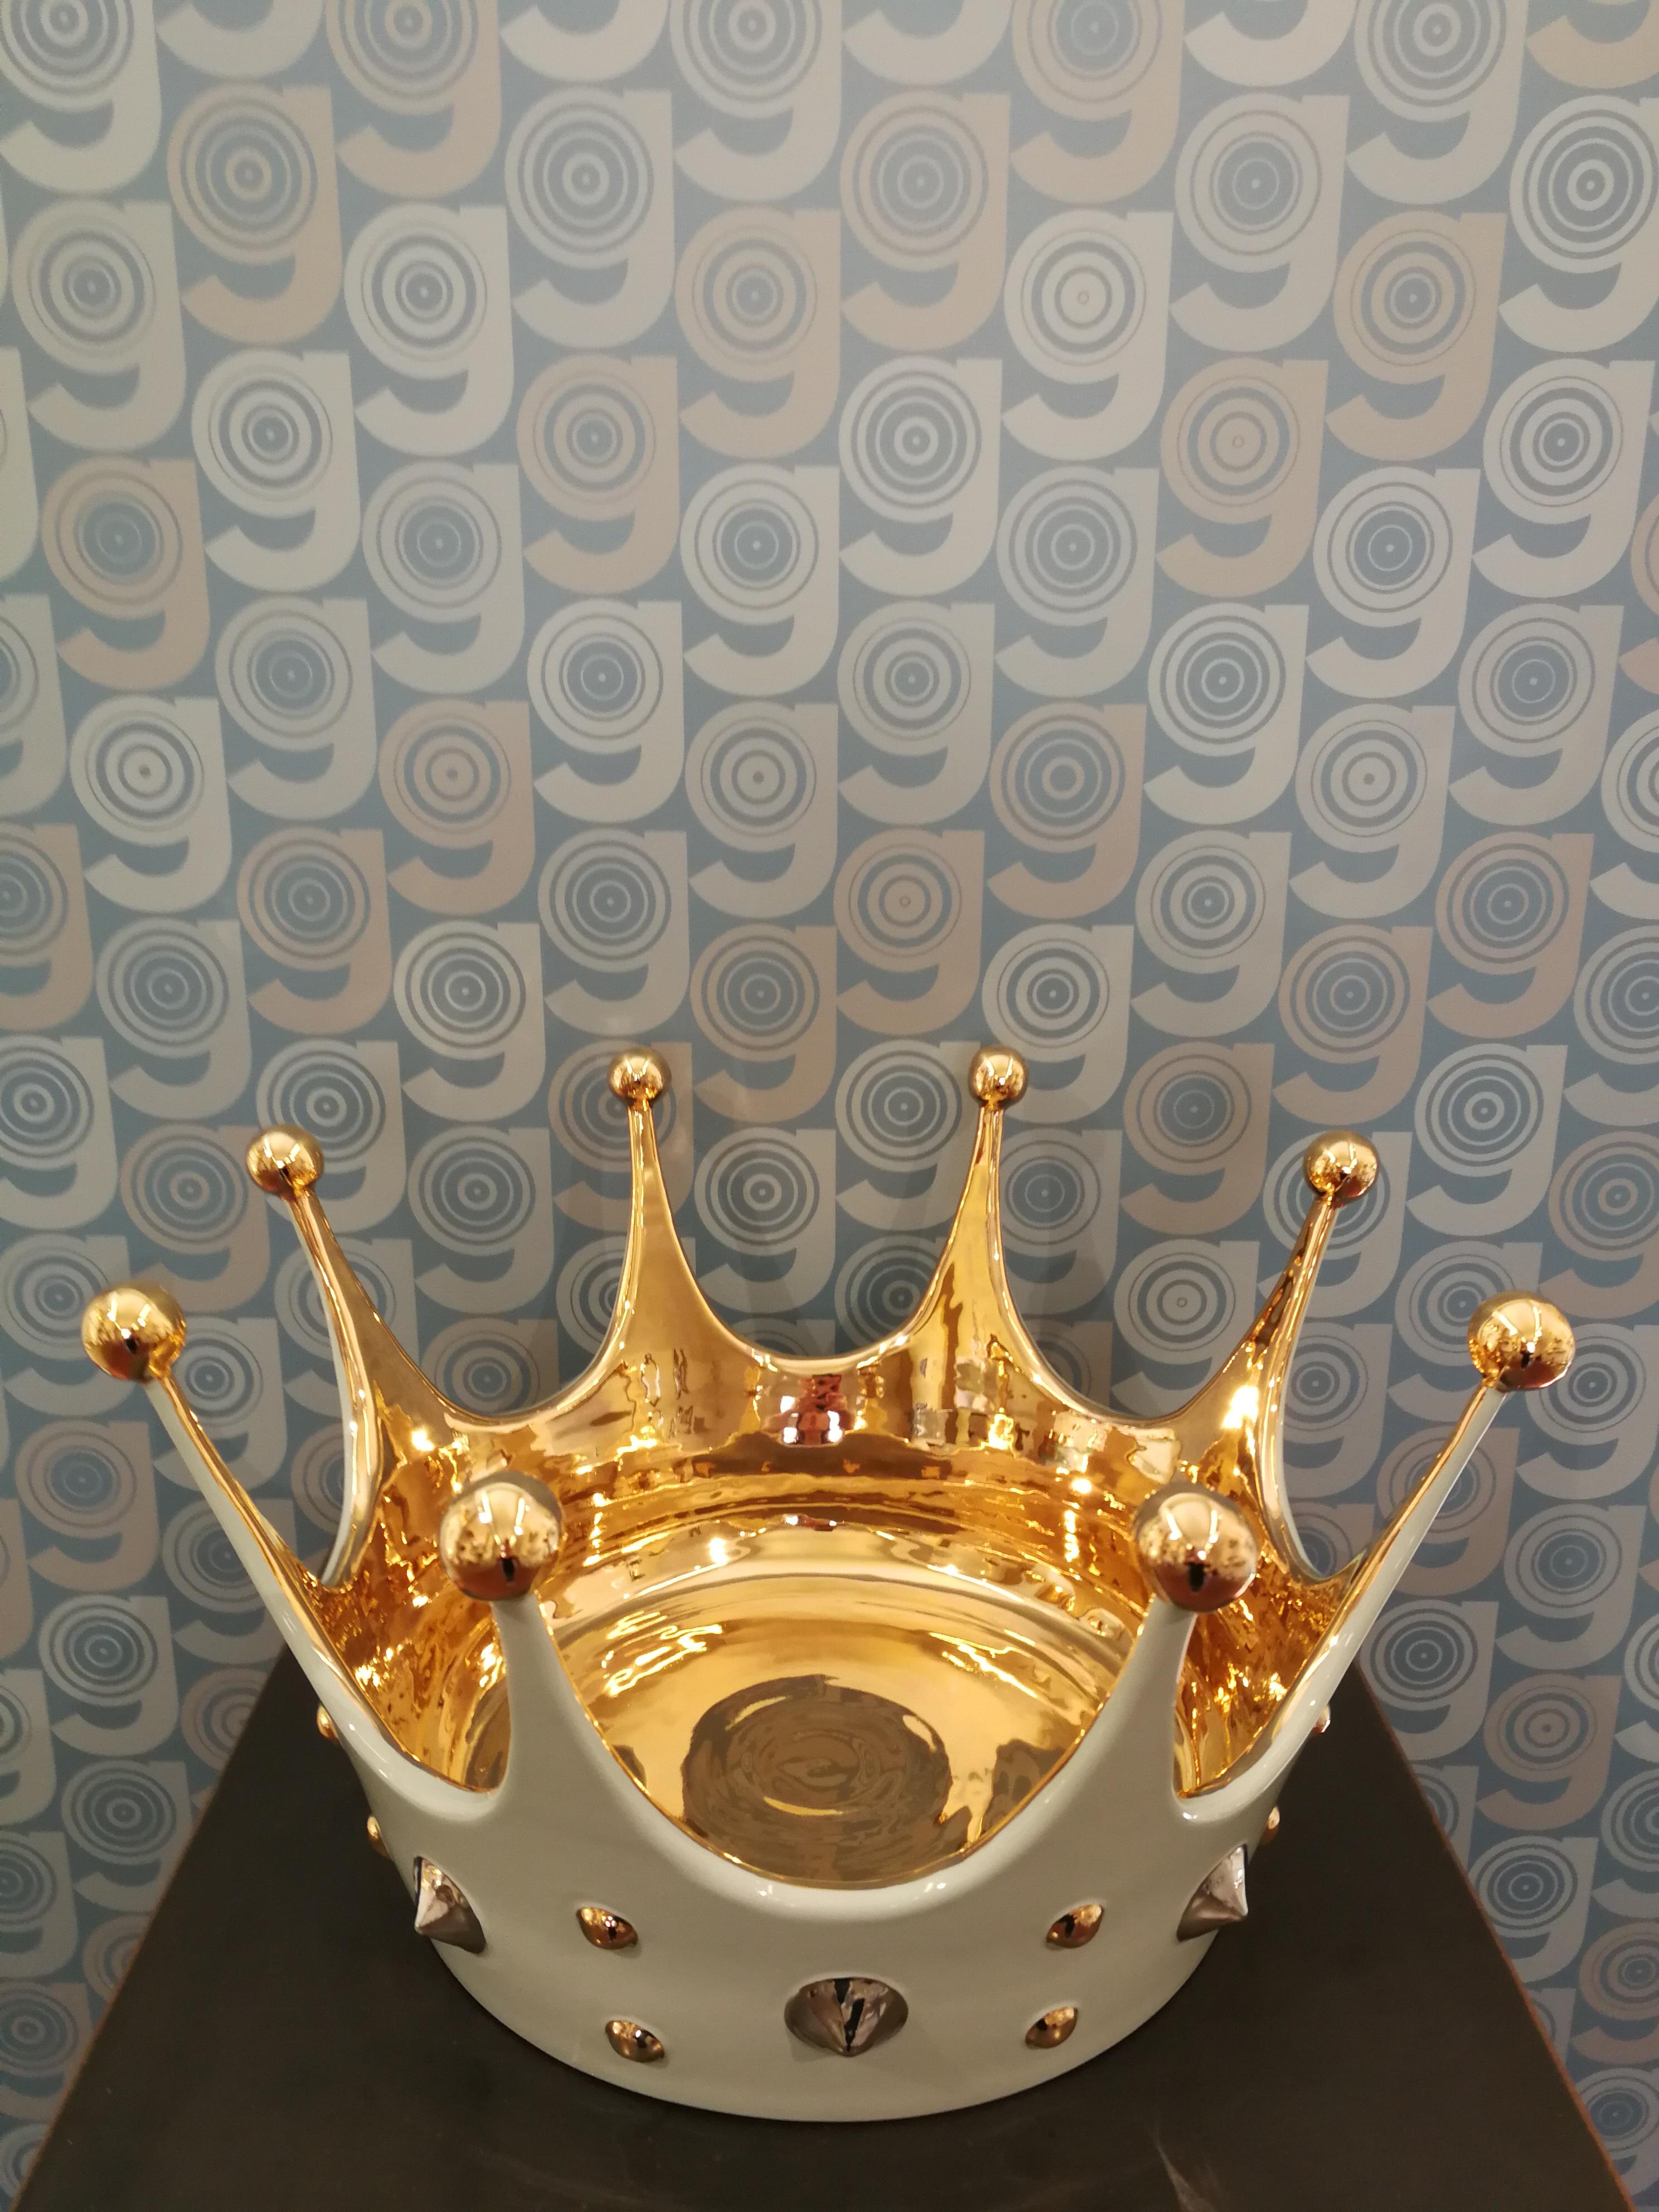 gold basket crown